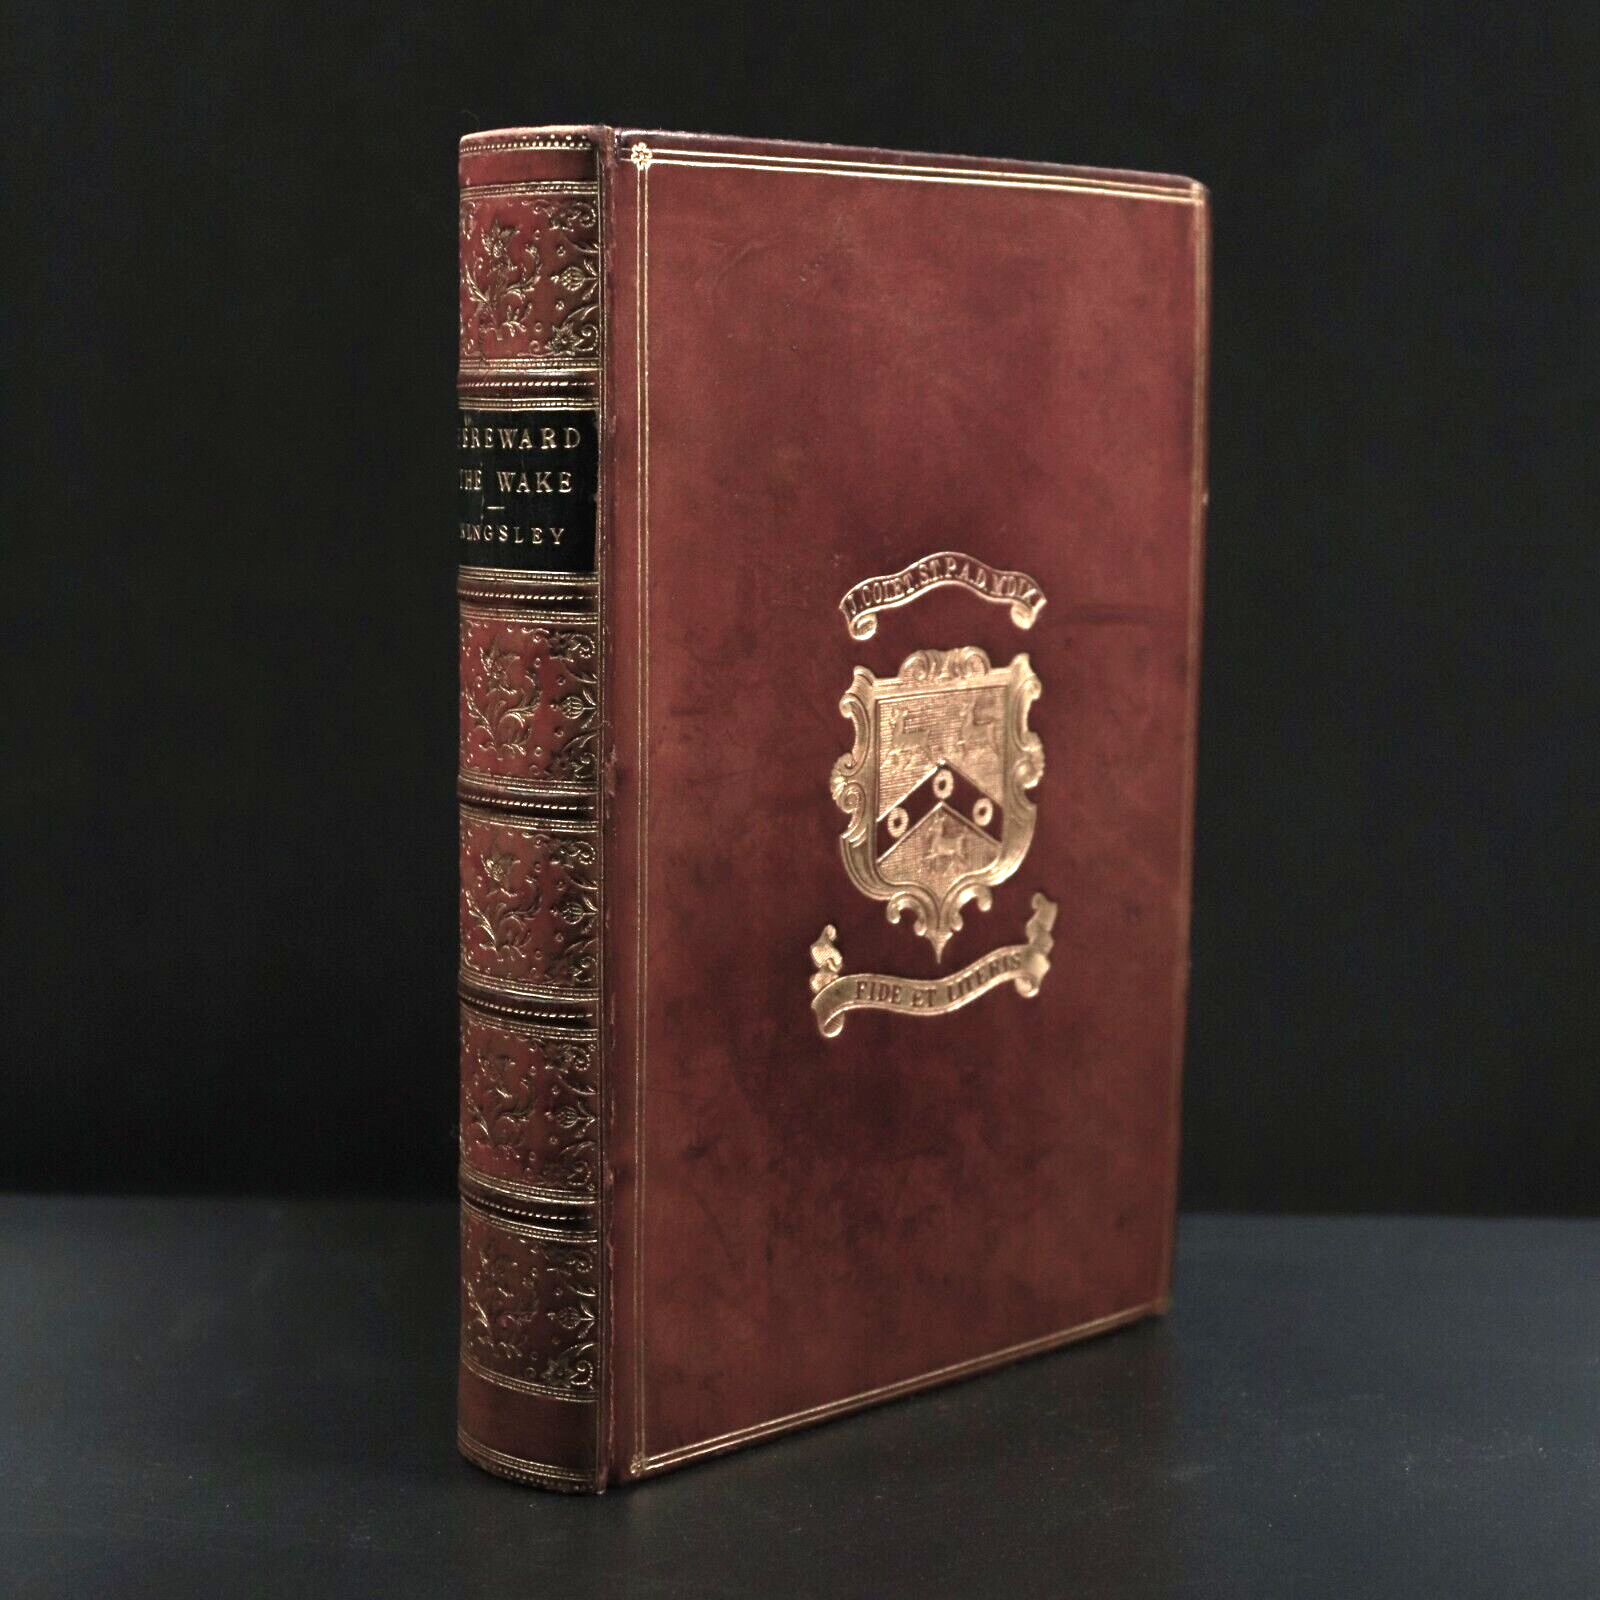 1884 Hereward The Wake by Charles Kingsley Antique Fiction Book Fine Binding